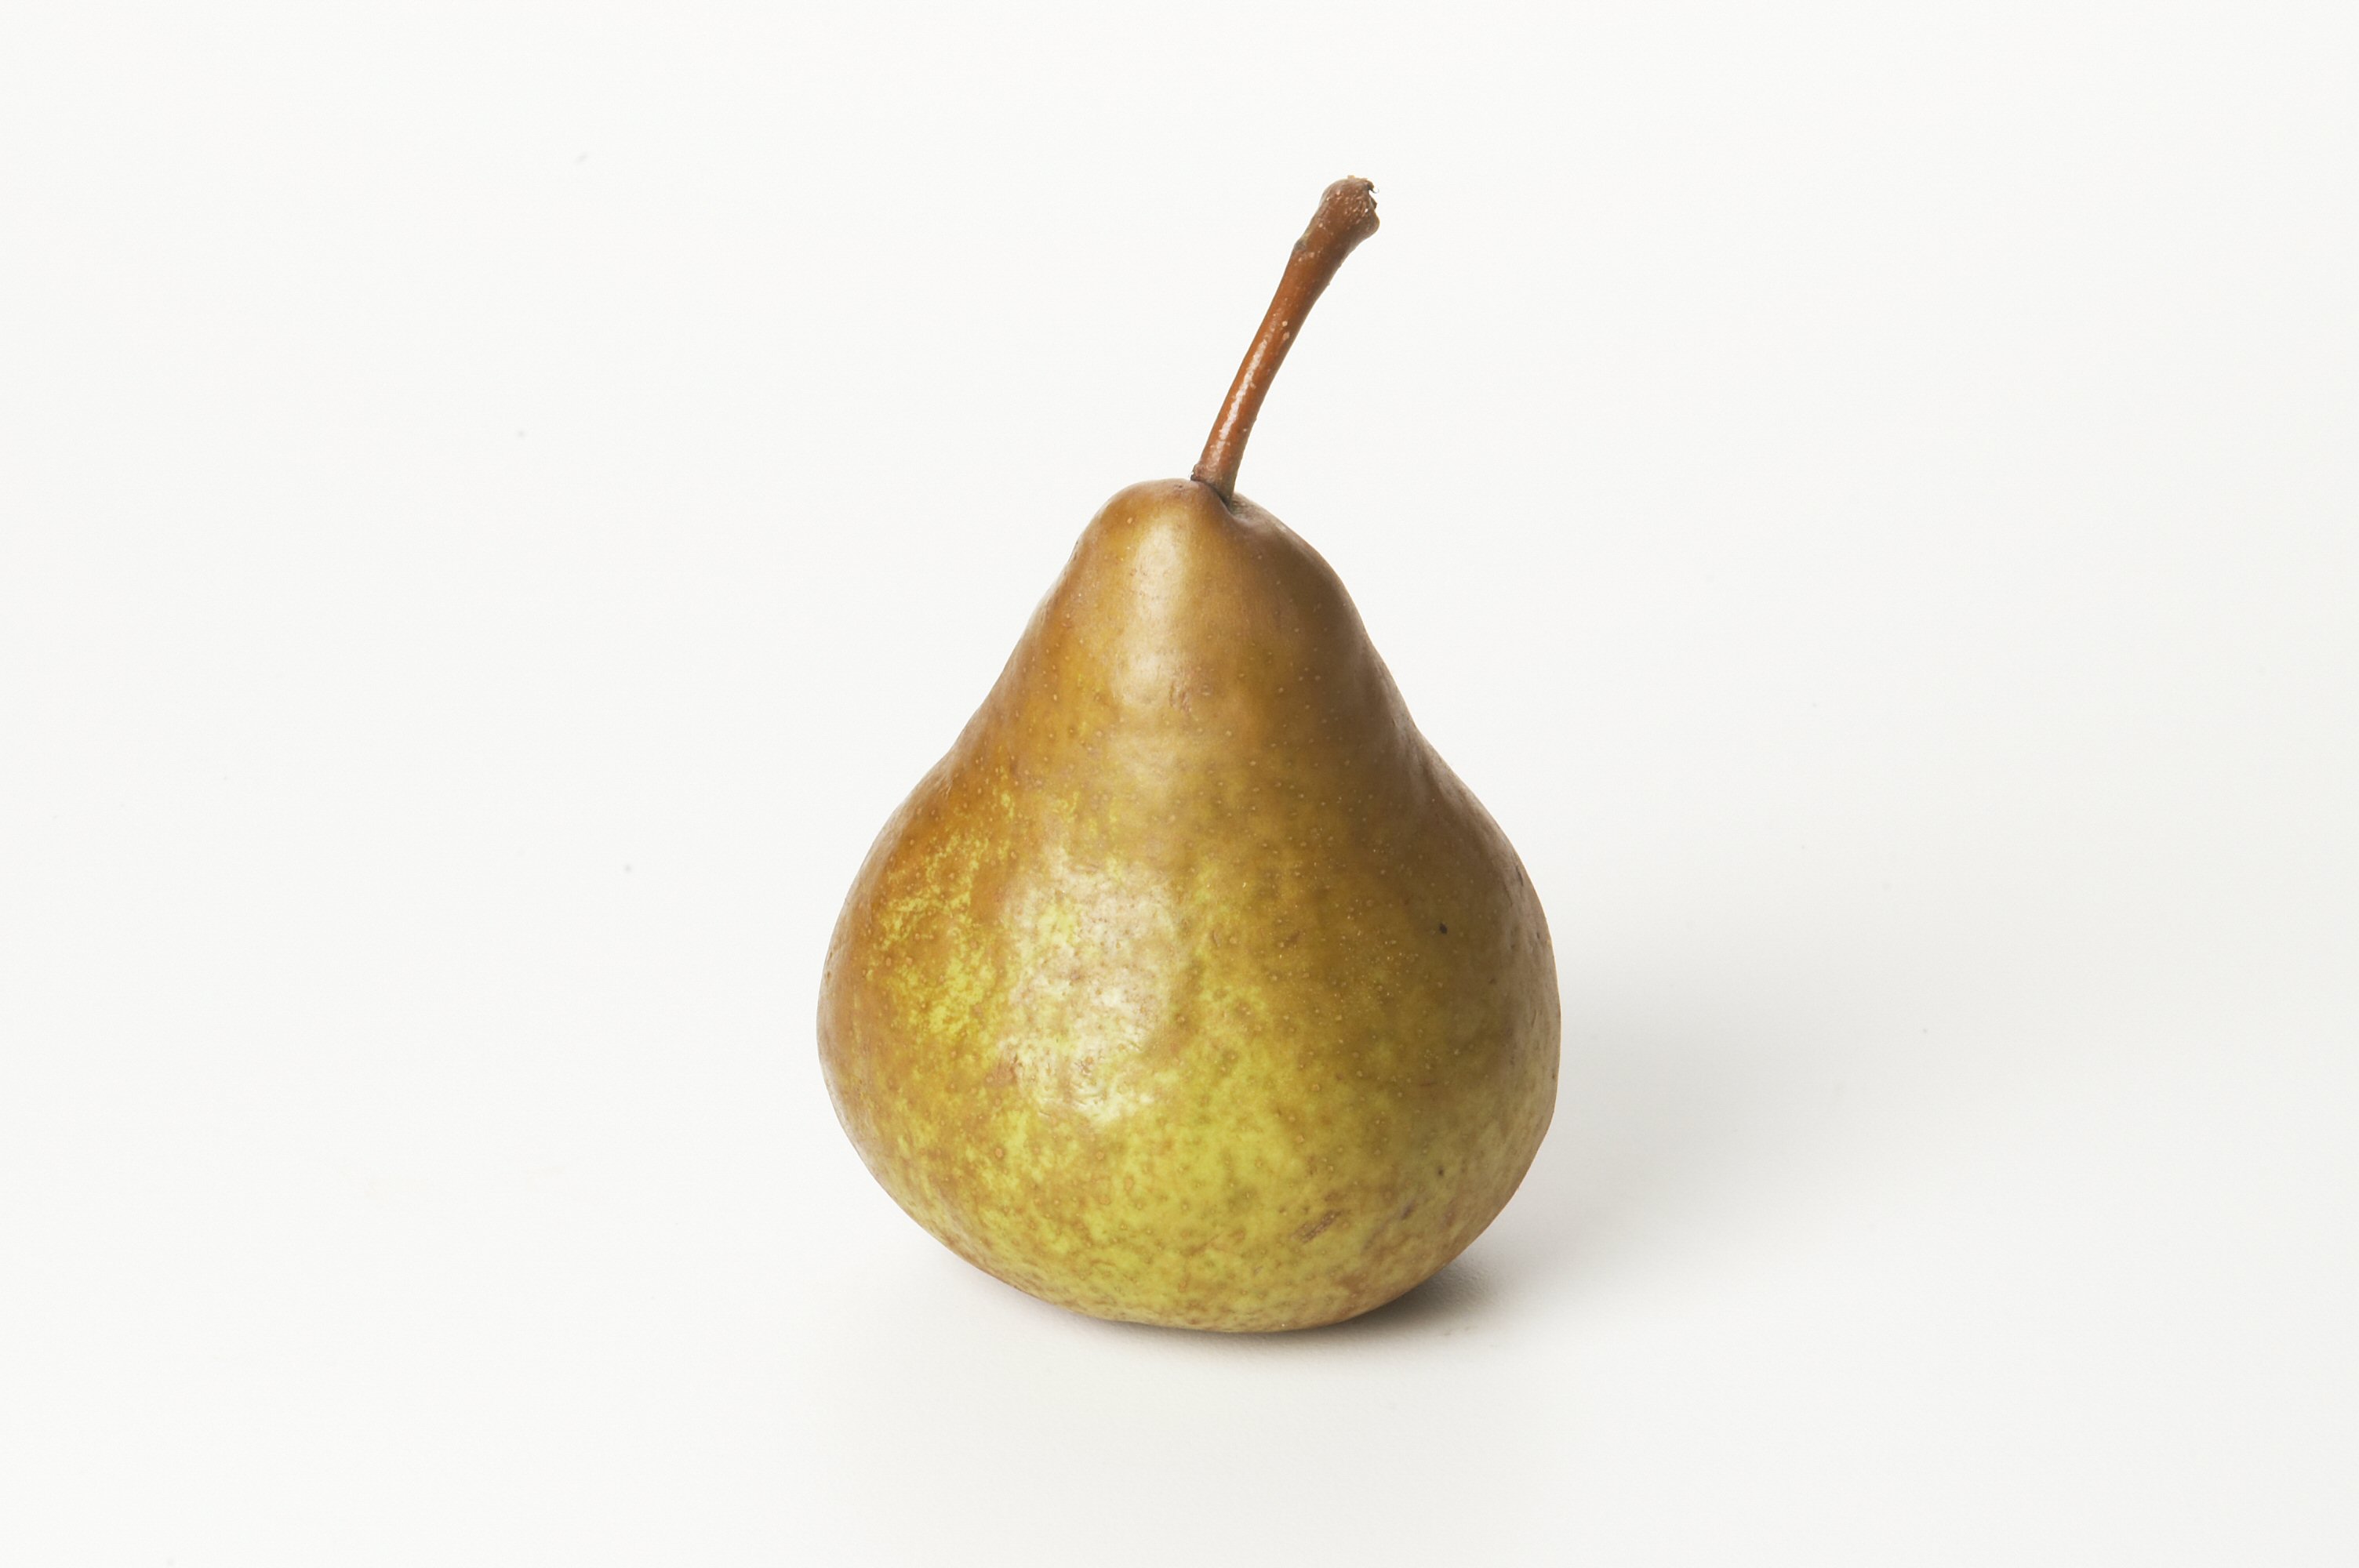 Pear Bosc